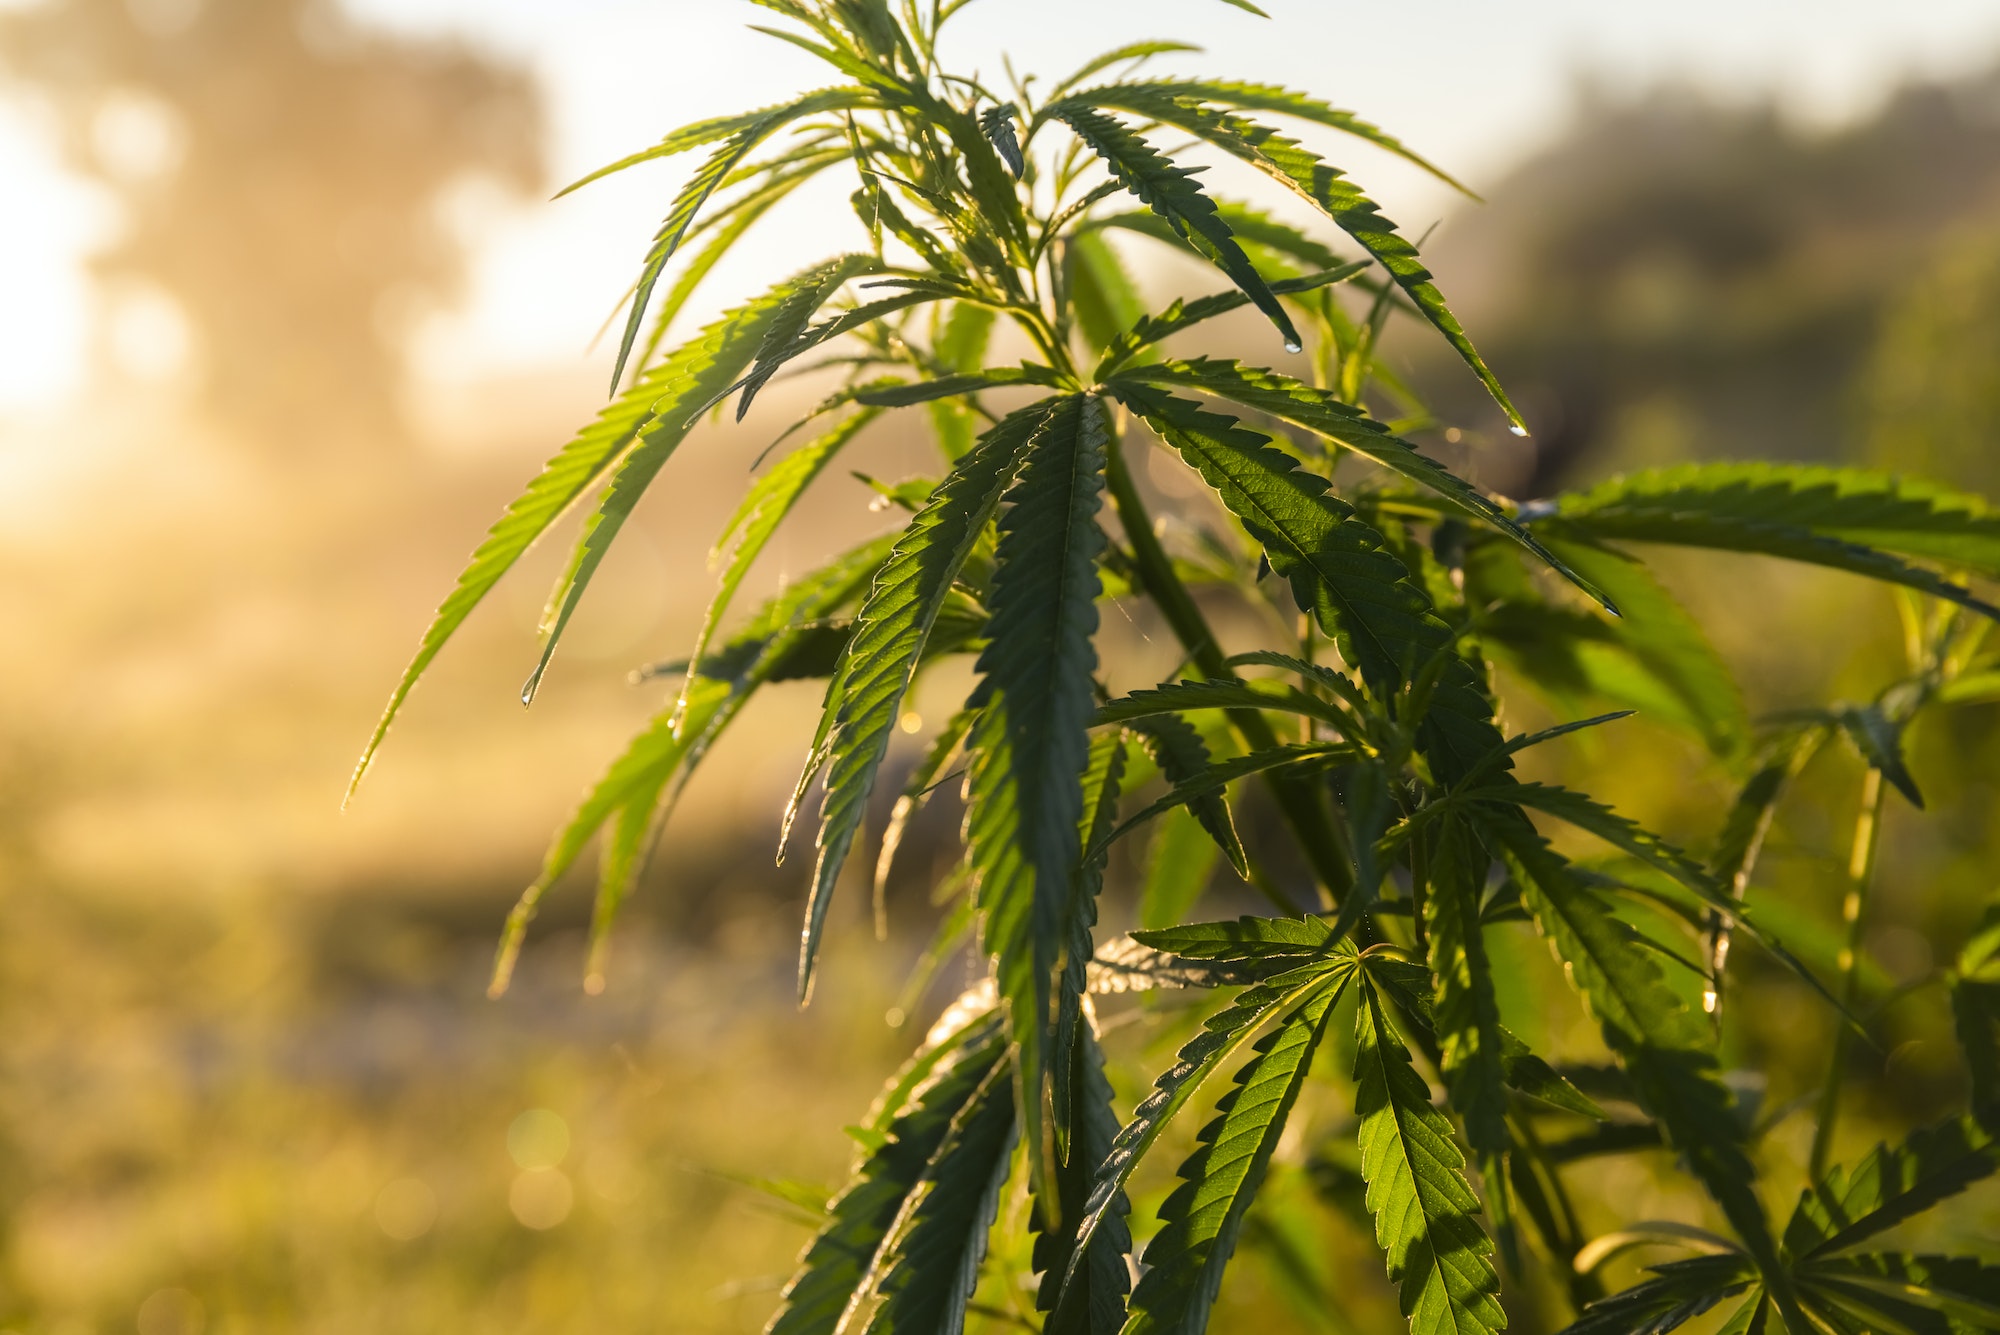 Green bushes of marijuana. Close up view of a young medical marijuana cannabis leaves